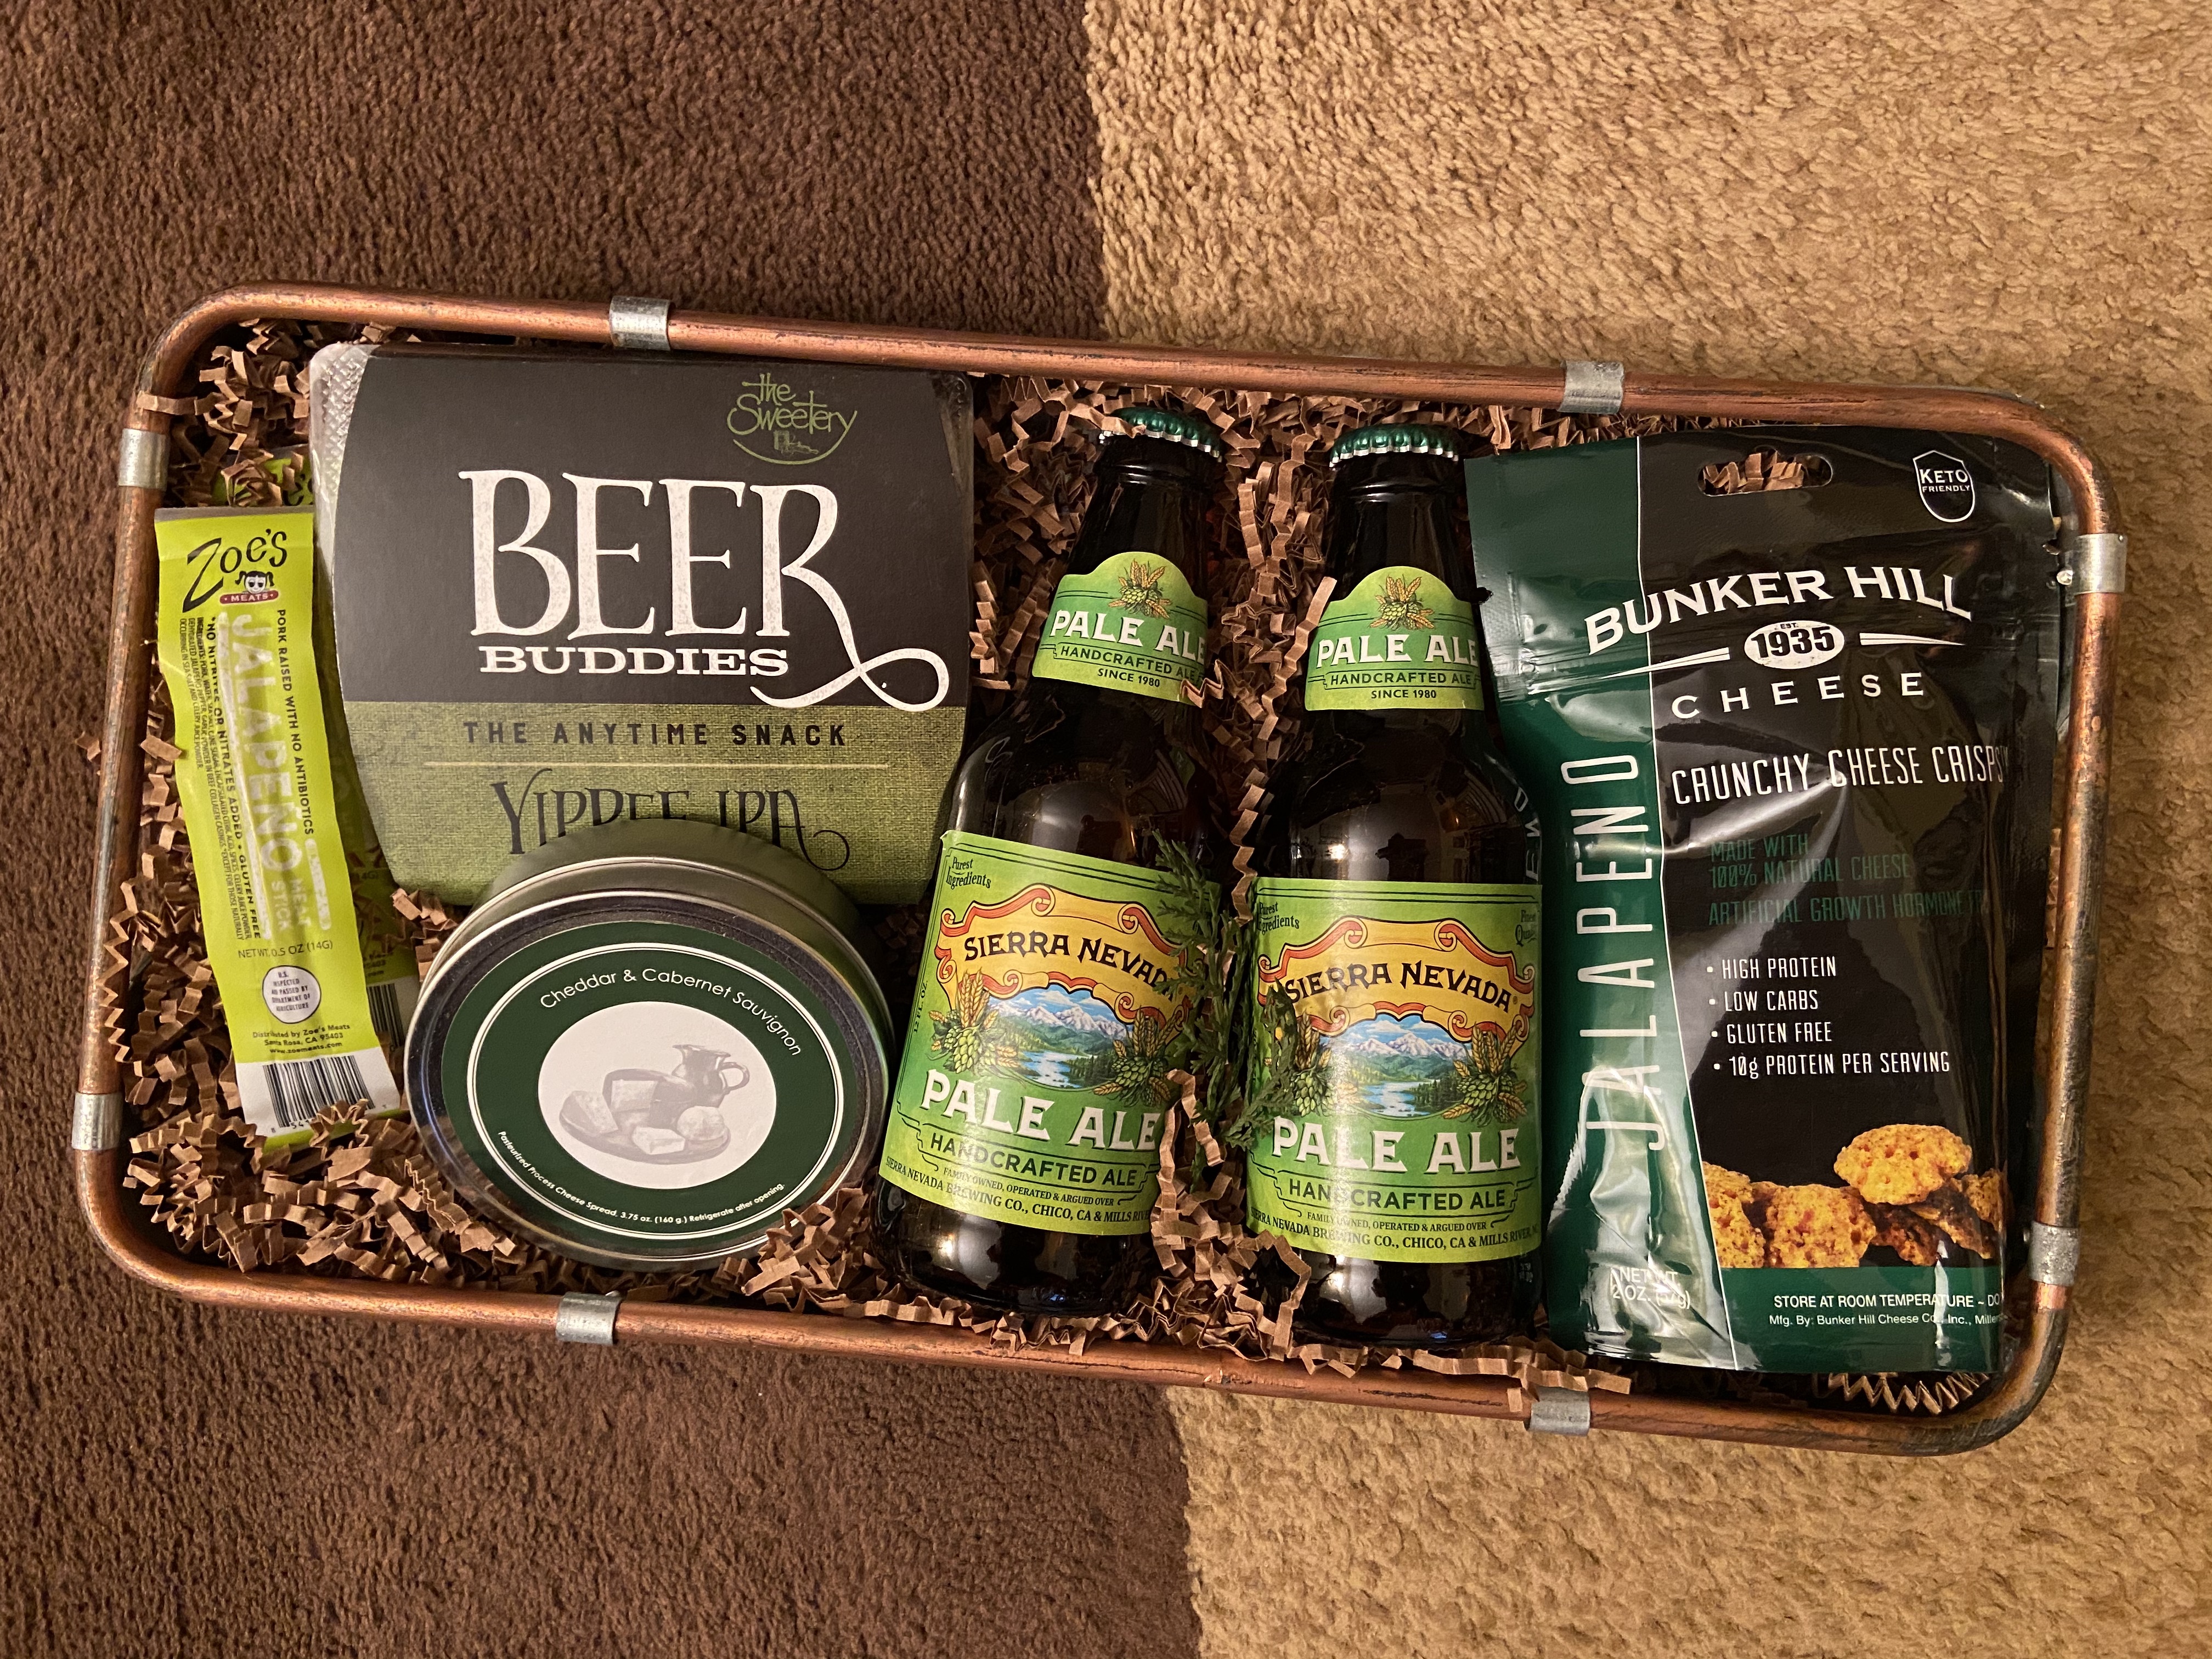 Sierra Nevada Beer Gift from JetGiftBaskets.